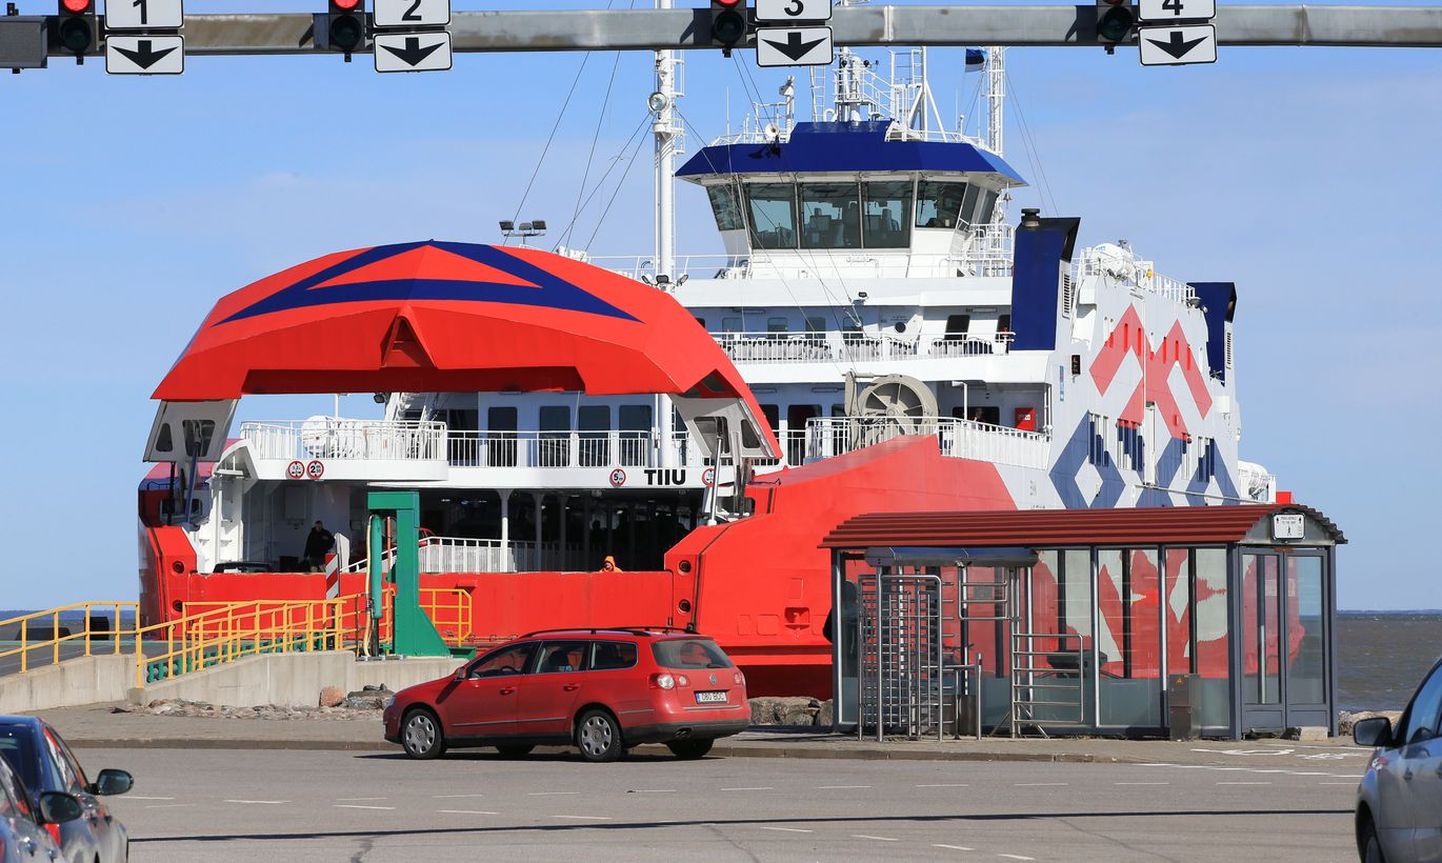 На фото паром "Тийу" в порту Хельтермаа.